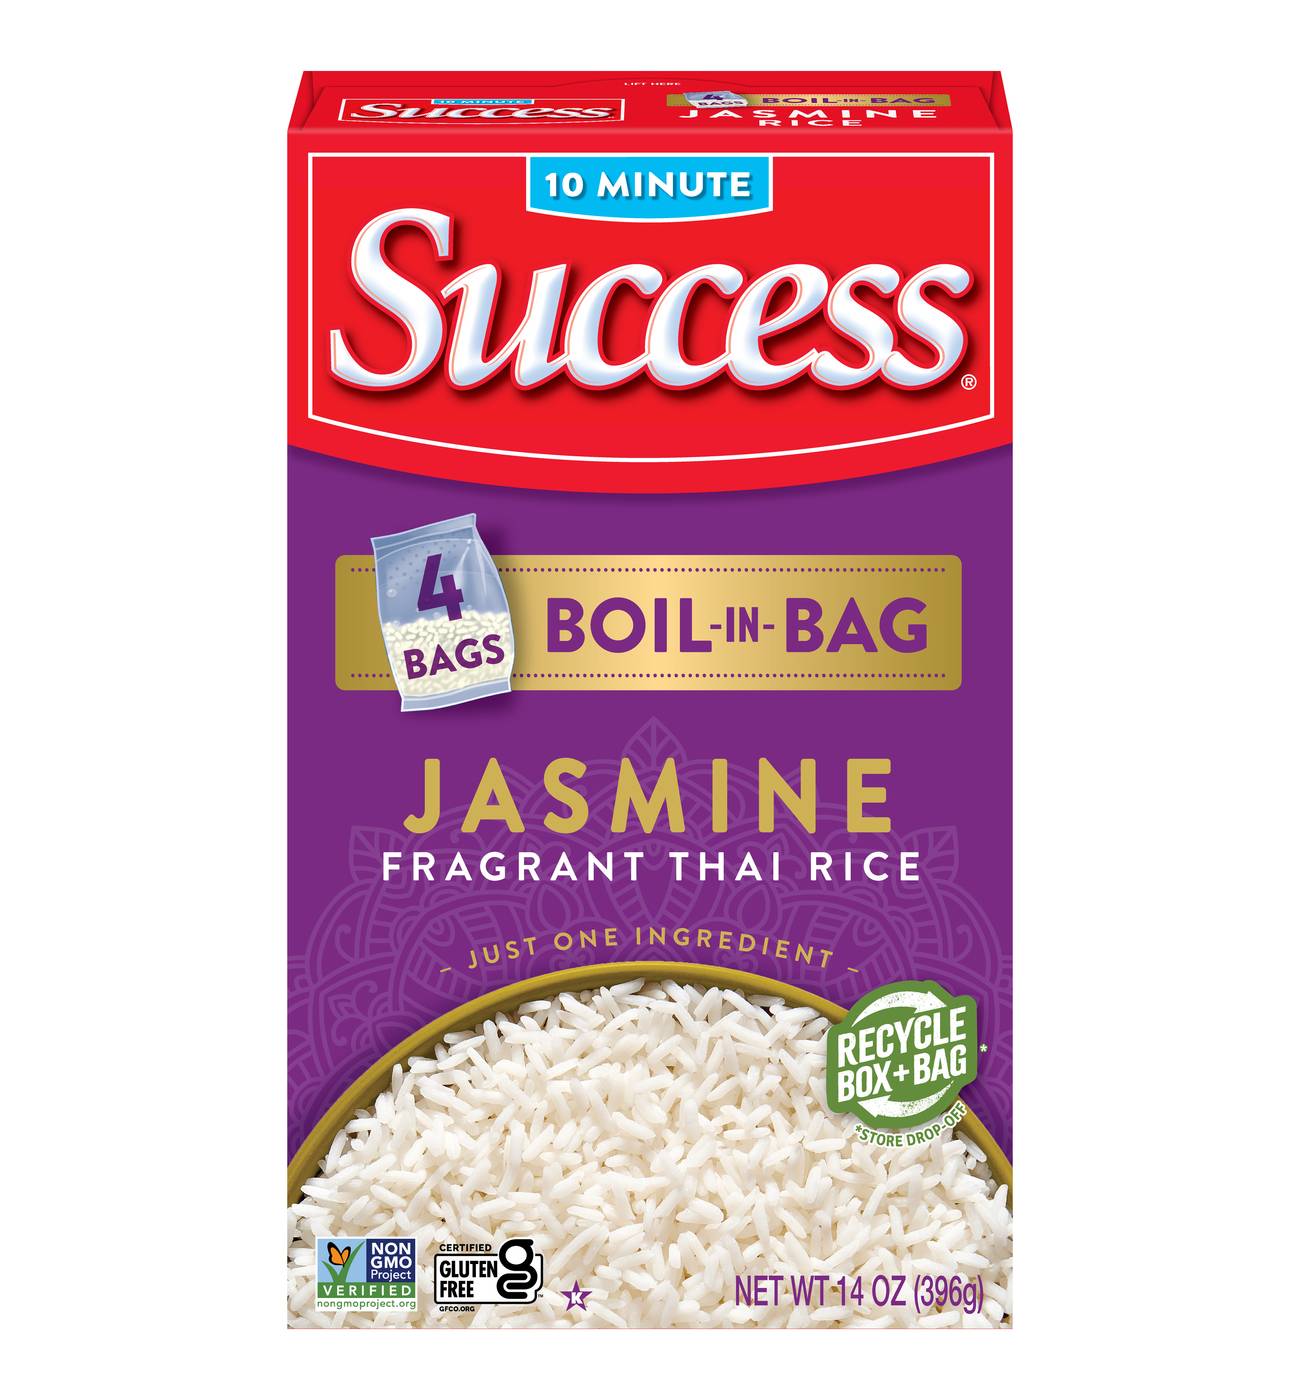 Success Boil-in-Bag Jasmine Rice; image 1 of 7